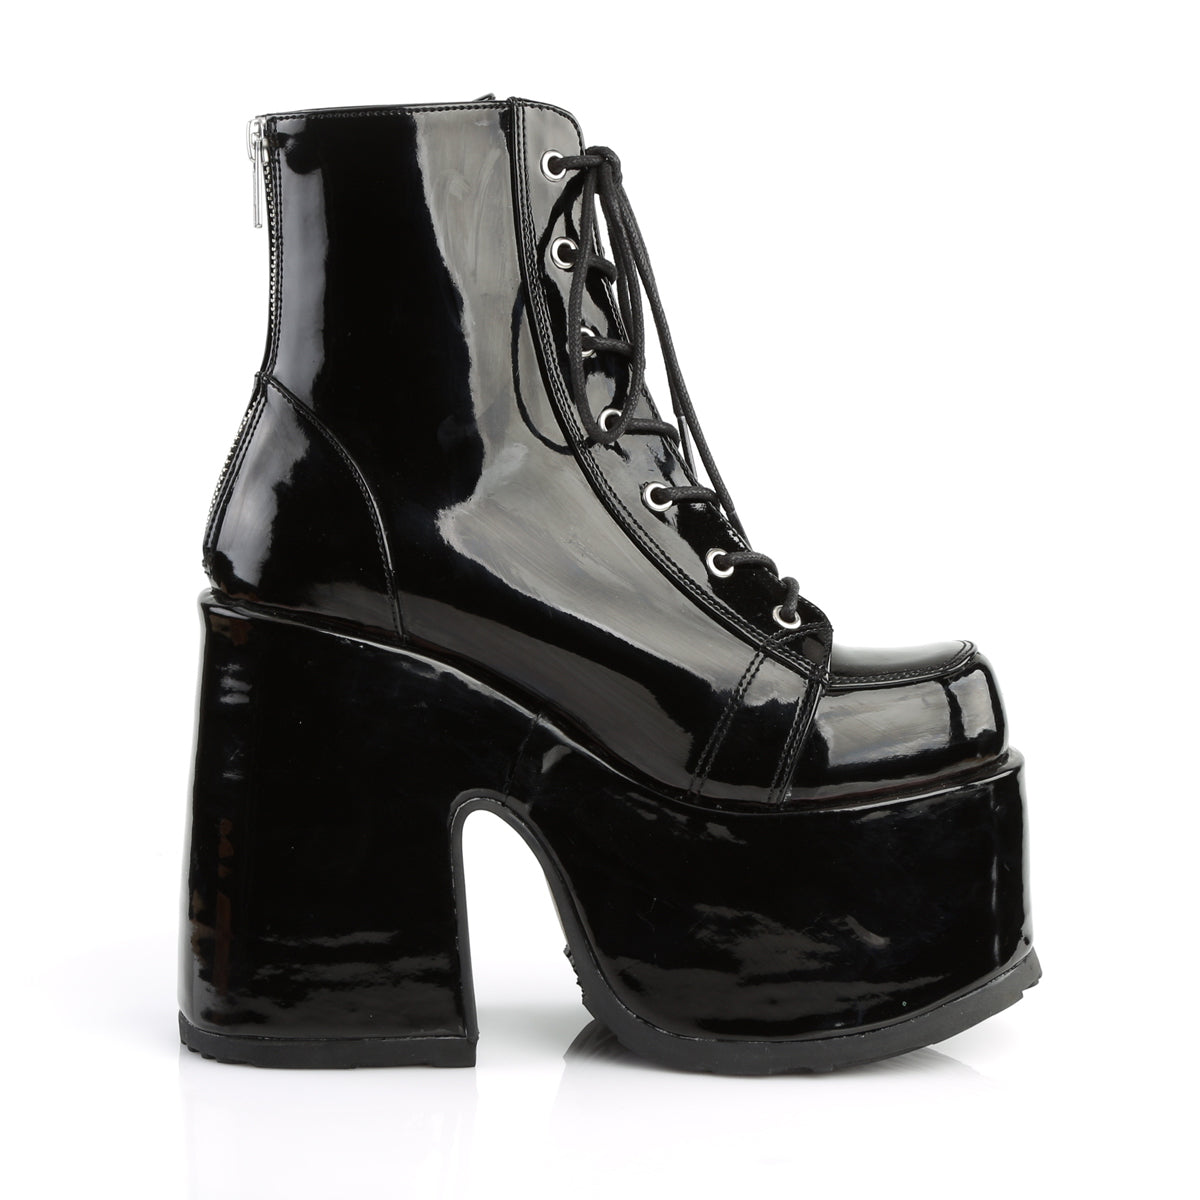 CAMEL-203 DemoniaCult Alternative Footwear Black Patent Platform Ankle Boots